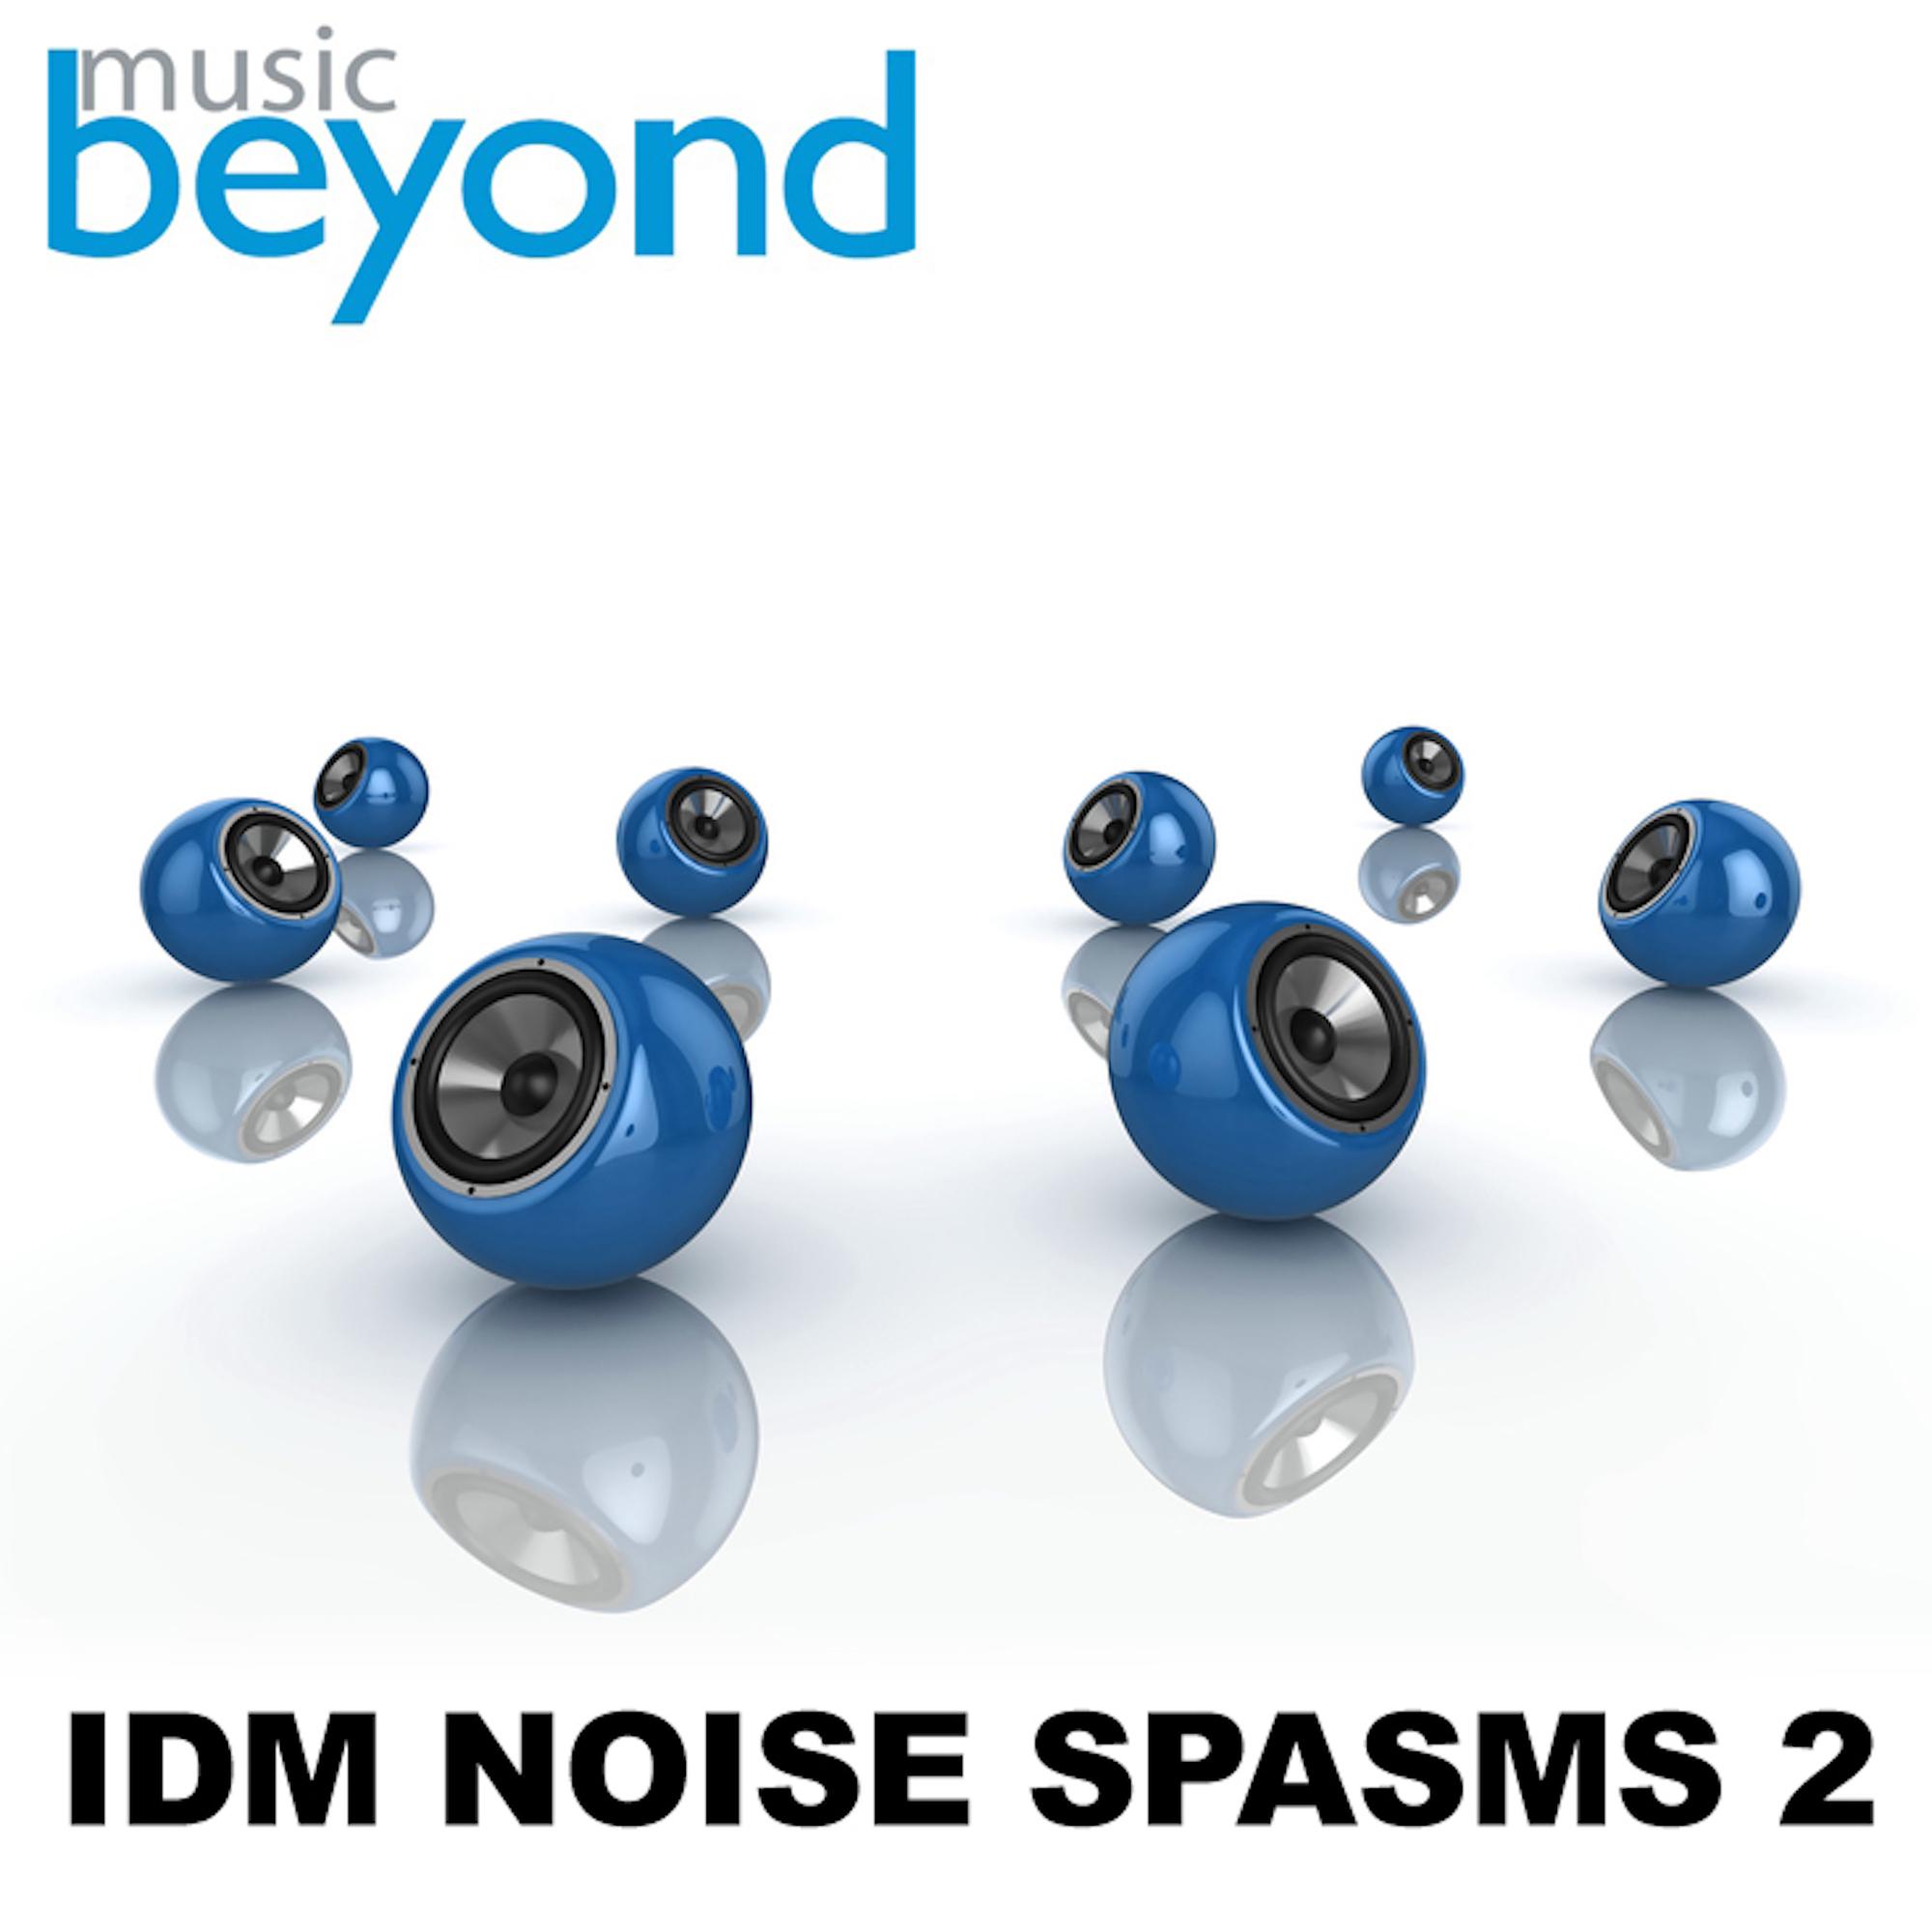 IDM Noise Spasms, Vol. 2